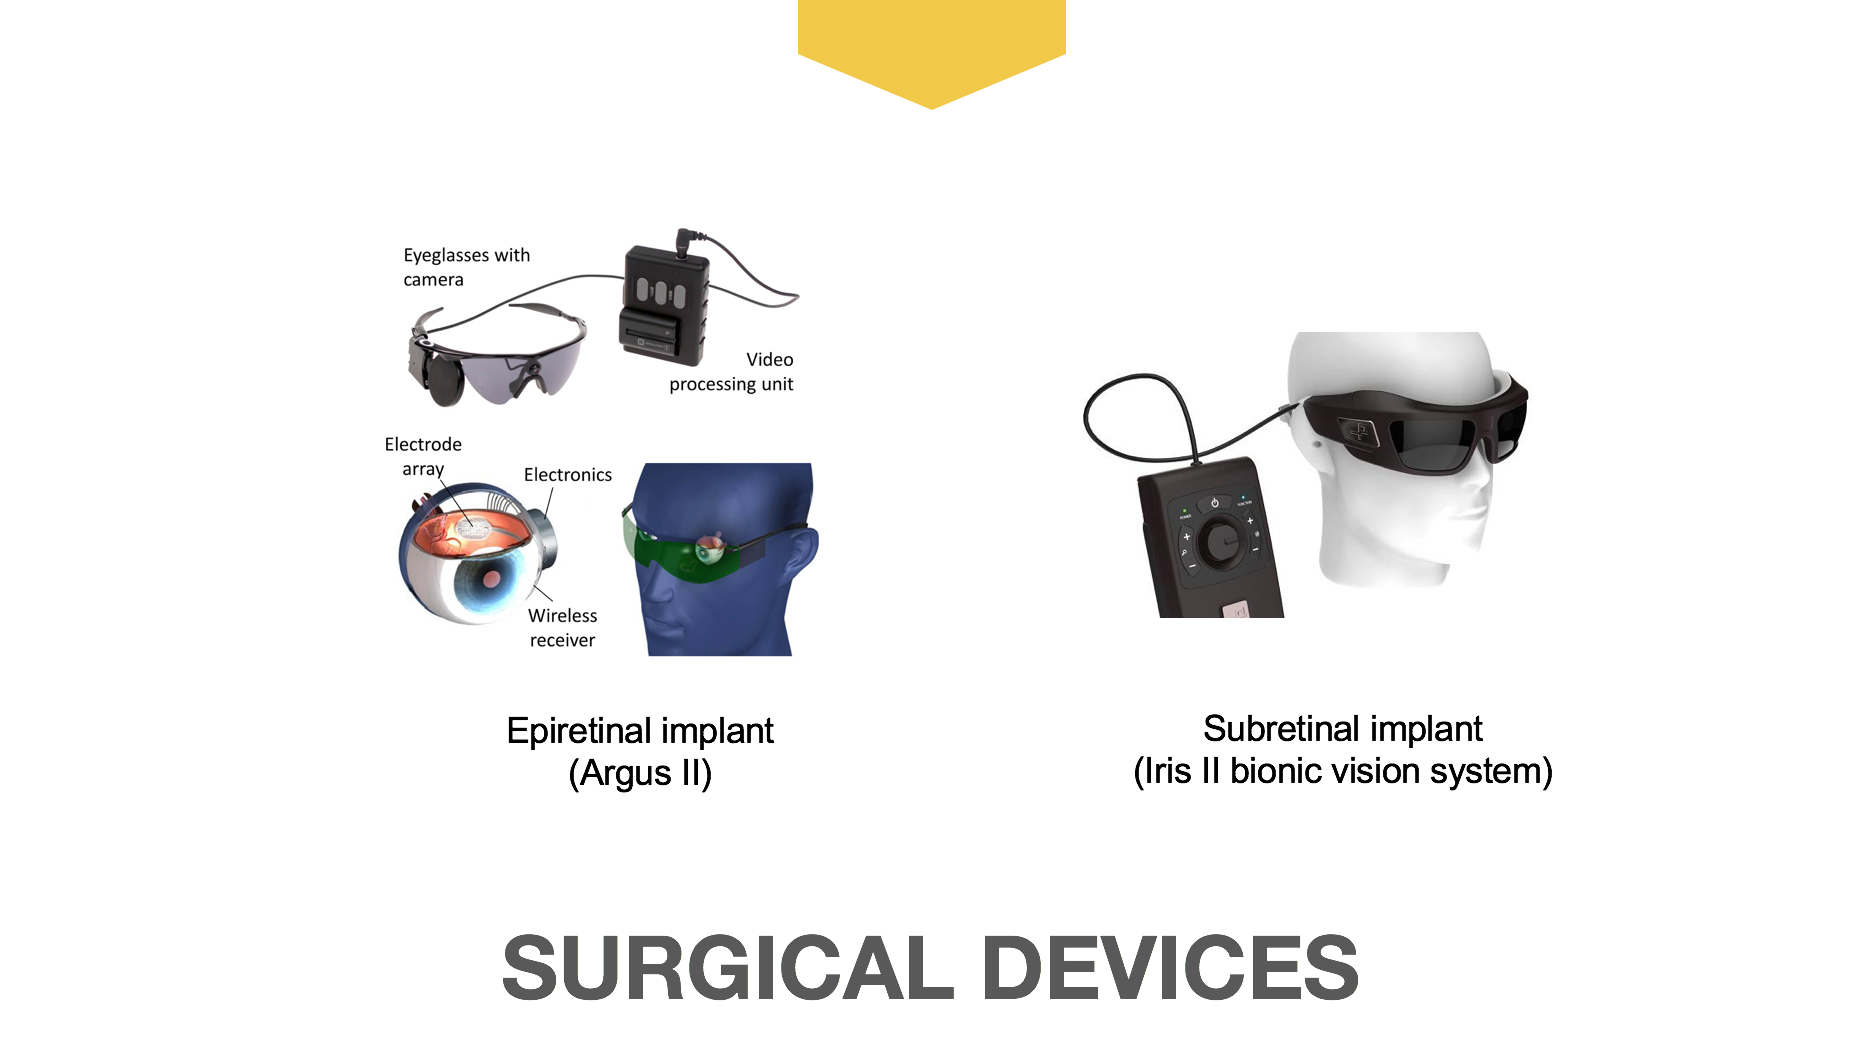 Argus II epiretinal implant and Iris II bionic vision system subretinal implant